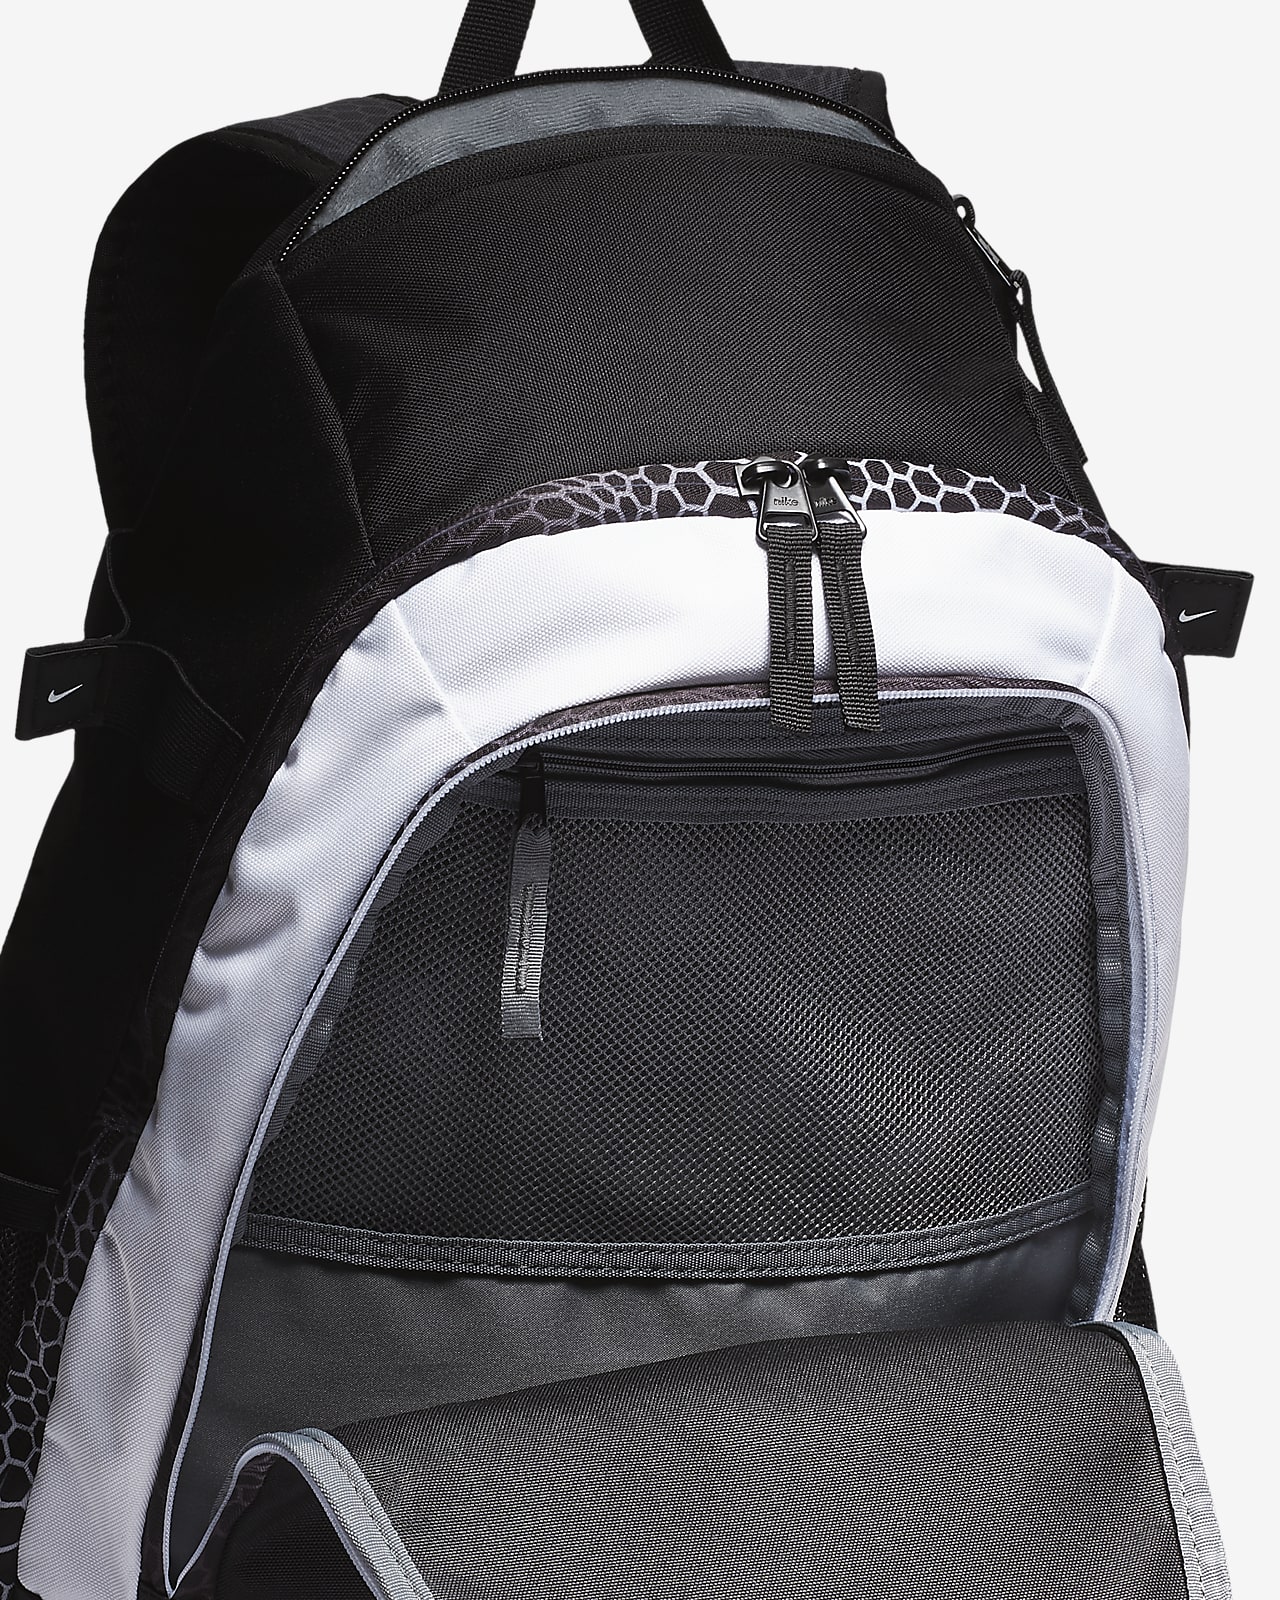 Nike Trout Vapor Baseball Backpack 